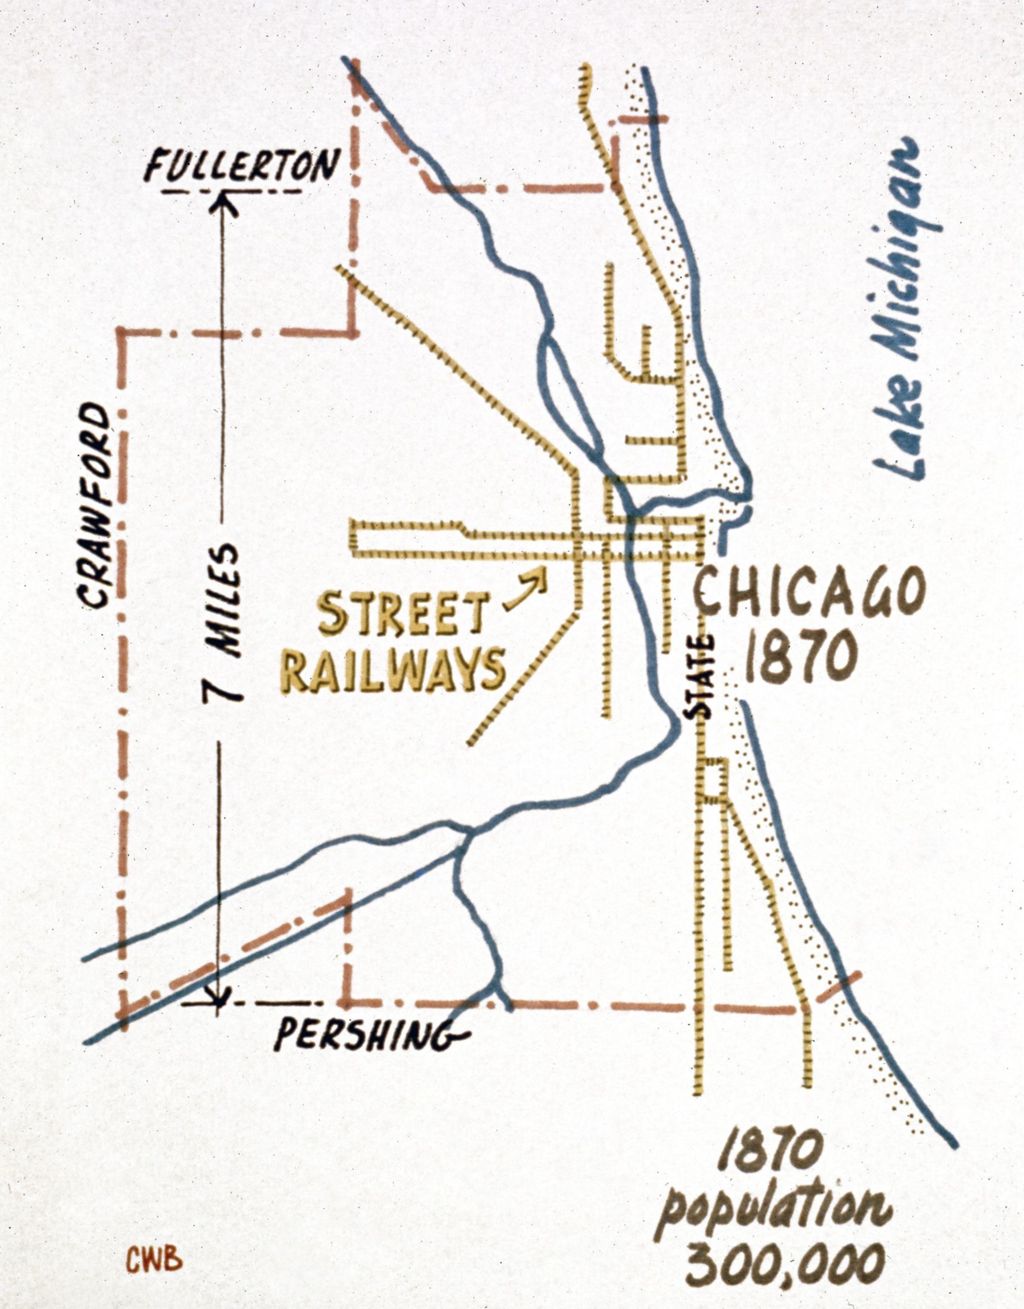 Miniature of Street railways, Chicago 1870